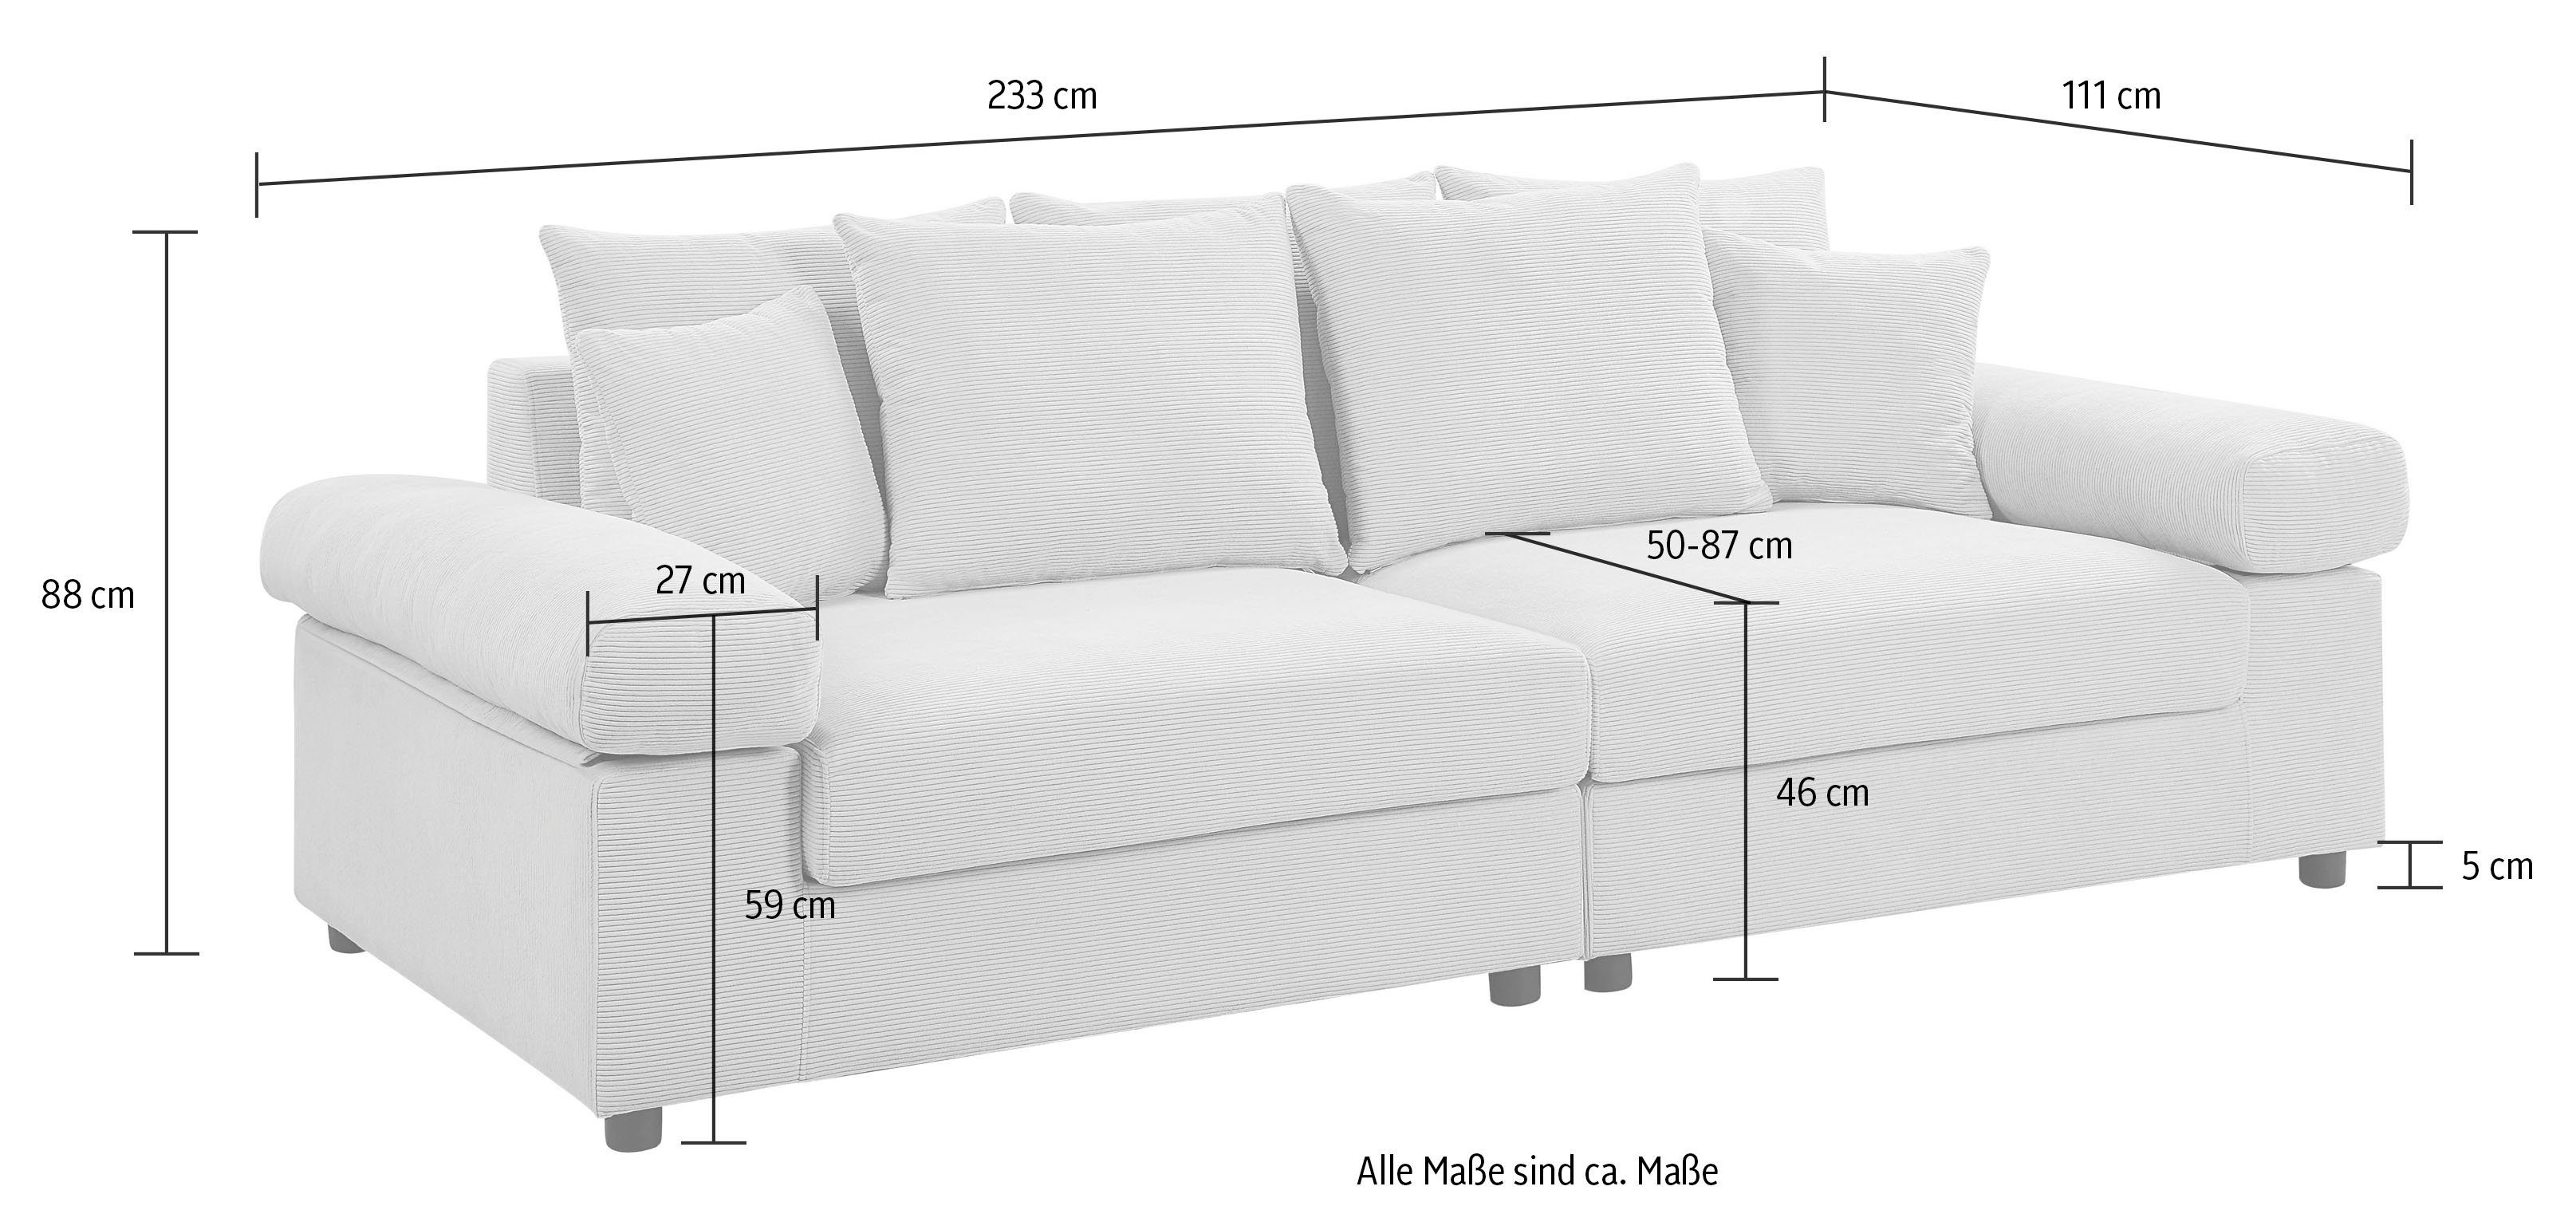 stellbar ATLANTIC collection Federkern, XXL-Sitzfläche, mit mit Big-Sofa Raum frei Bjoern, im grau home Cord-Bezug,